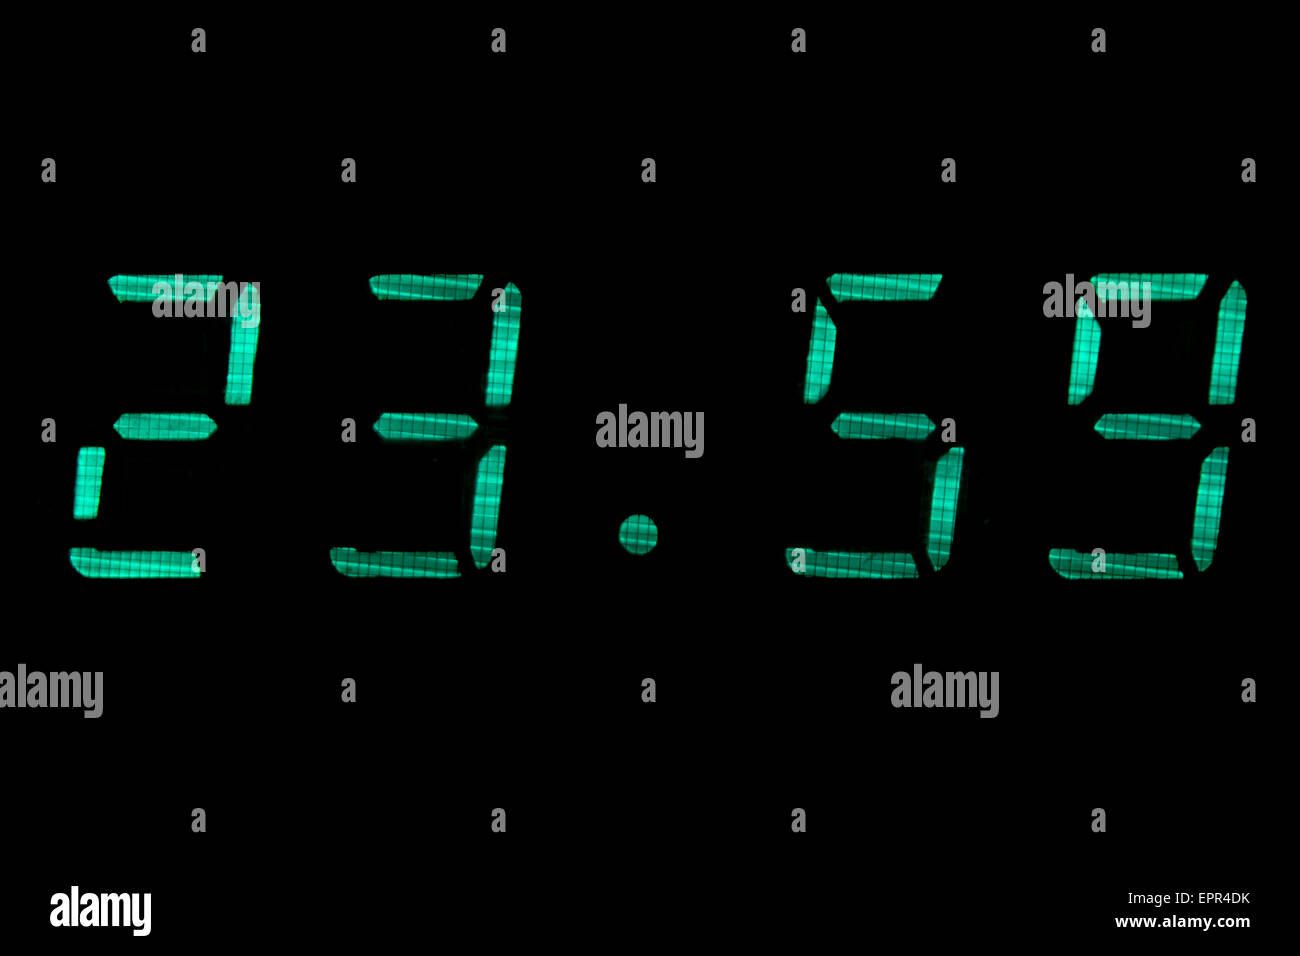 Digital clock in green Stock Photo